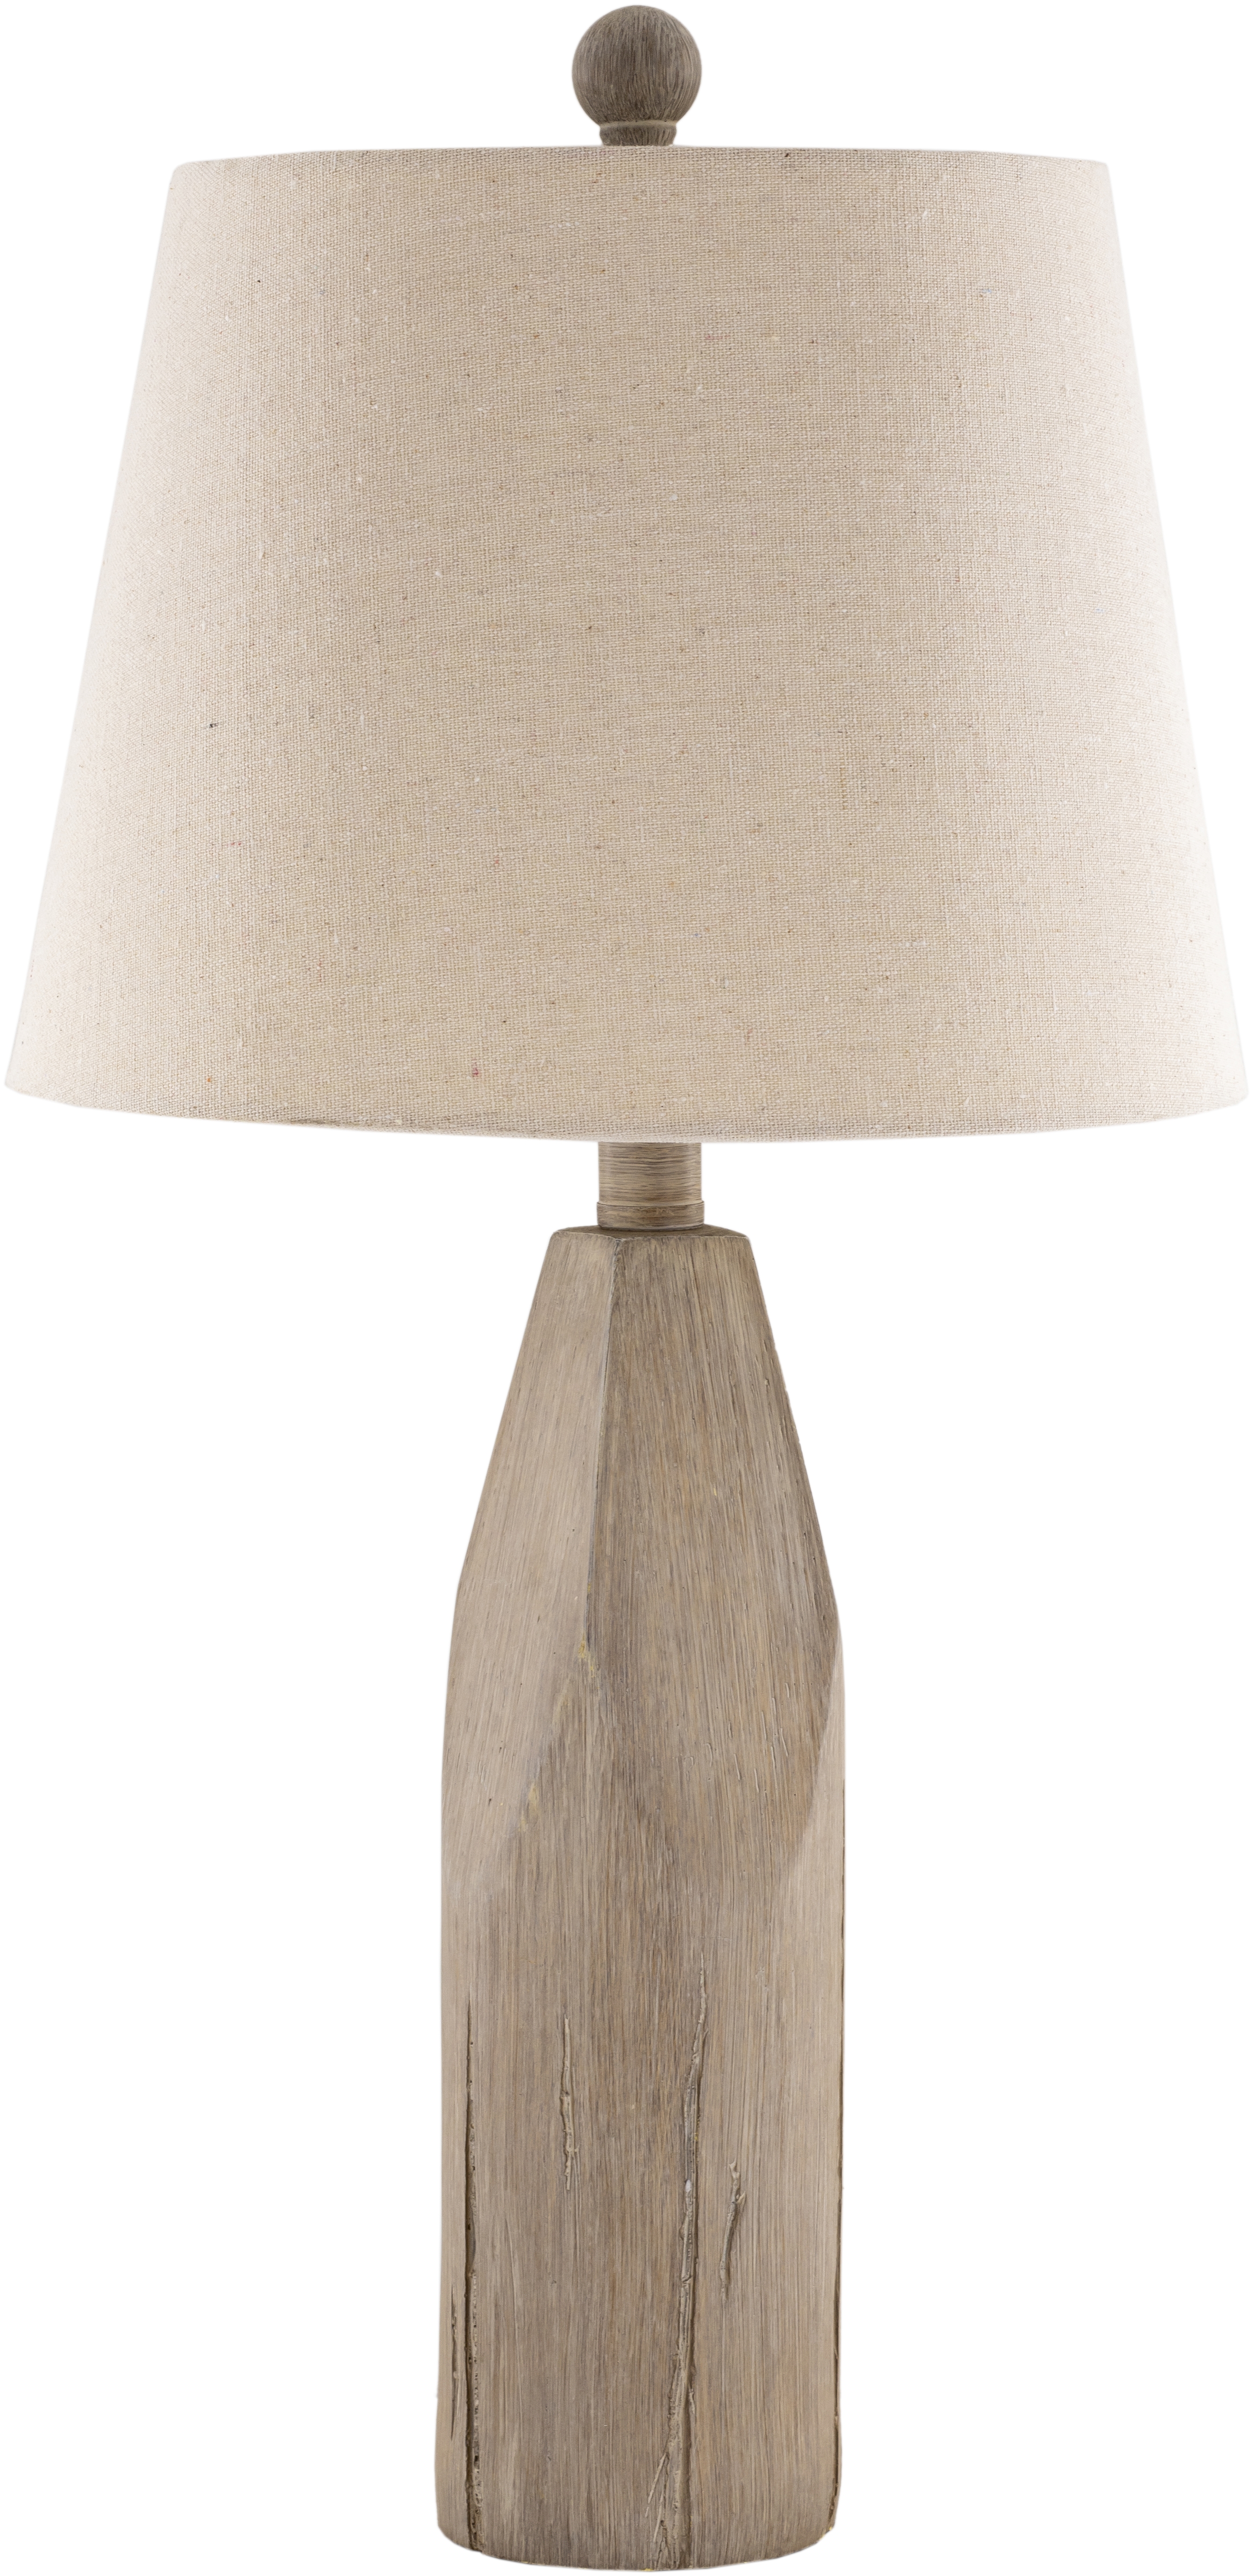 June Table Lamp - Image 0